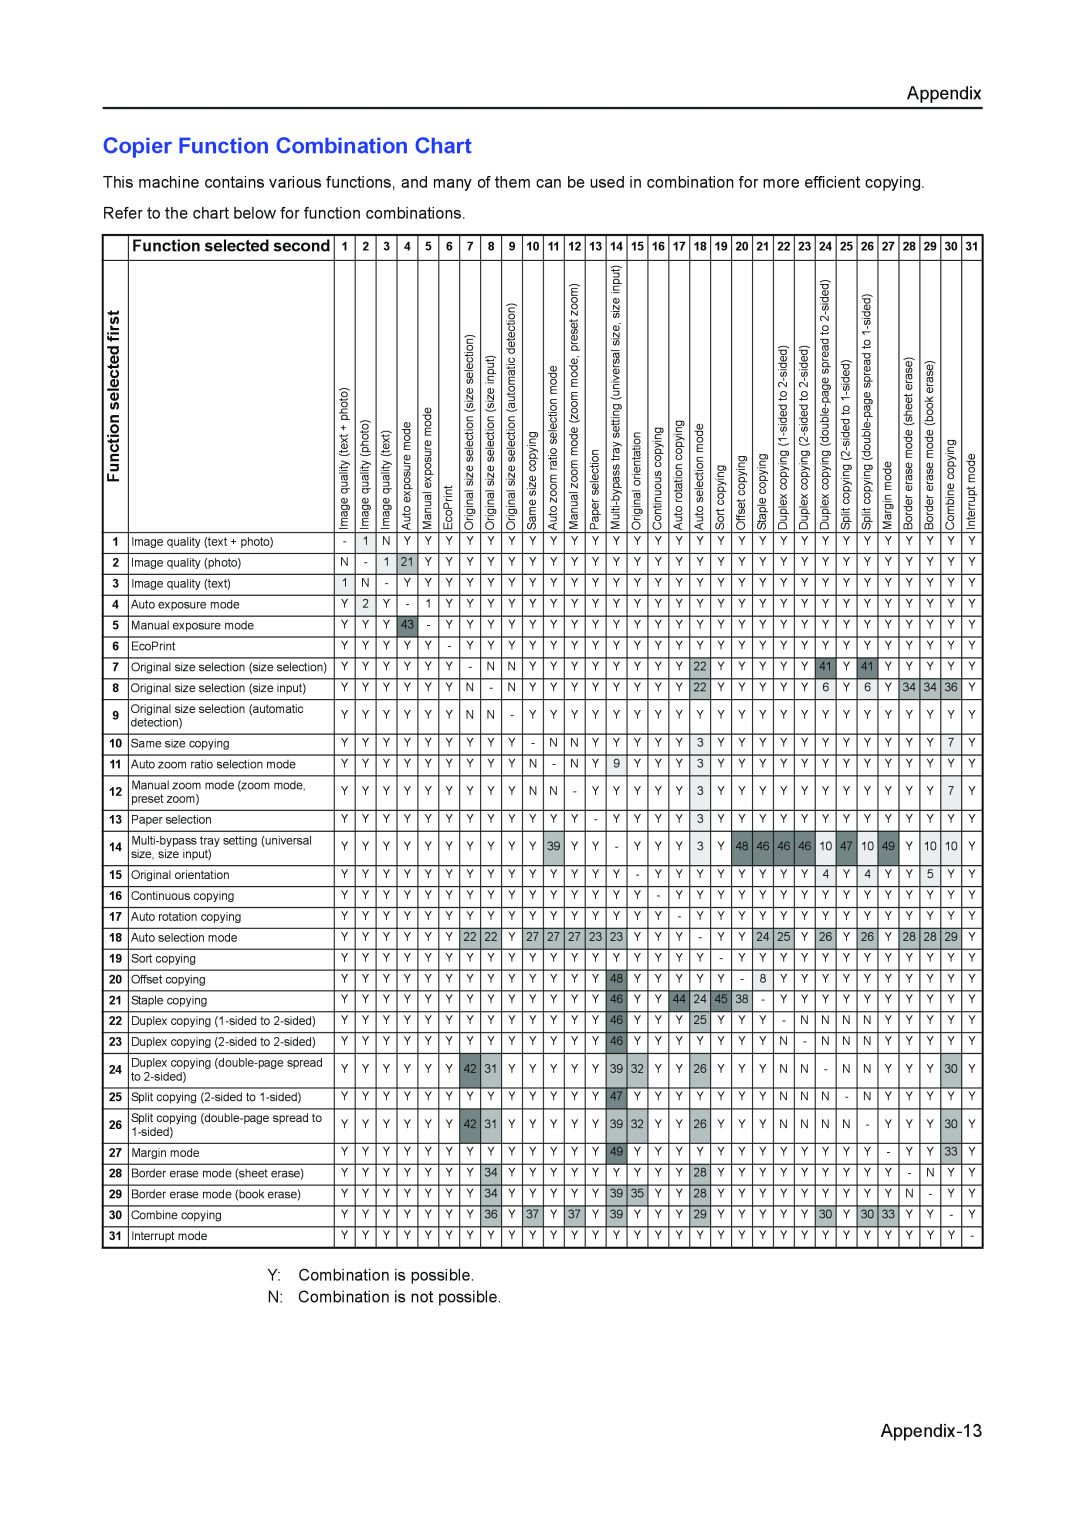 Kyocera 2550, 2050, 1650 Copier Function Combination Chart, Appendix-13, Function selected second, Function selected first 